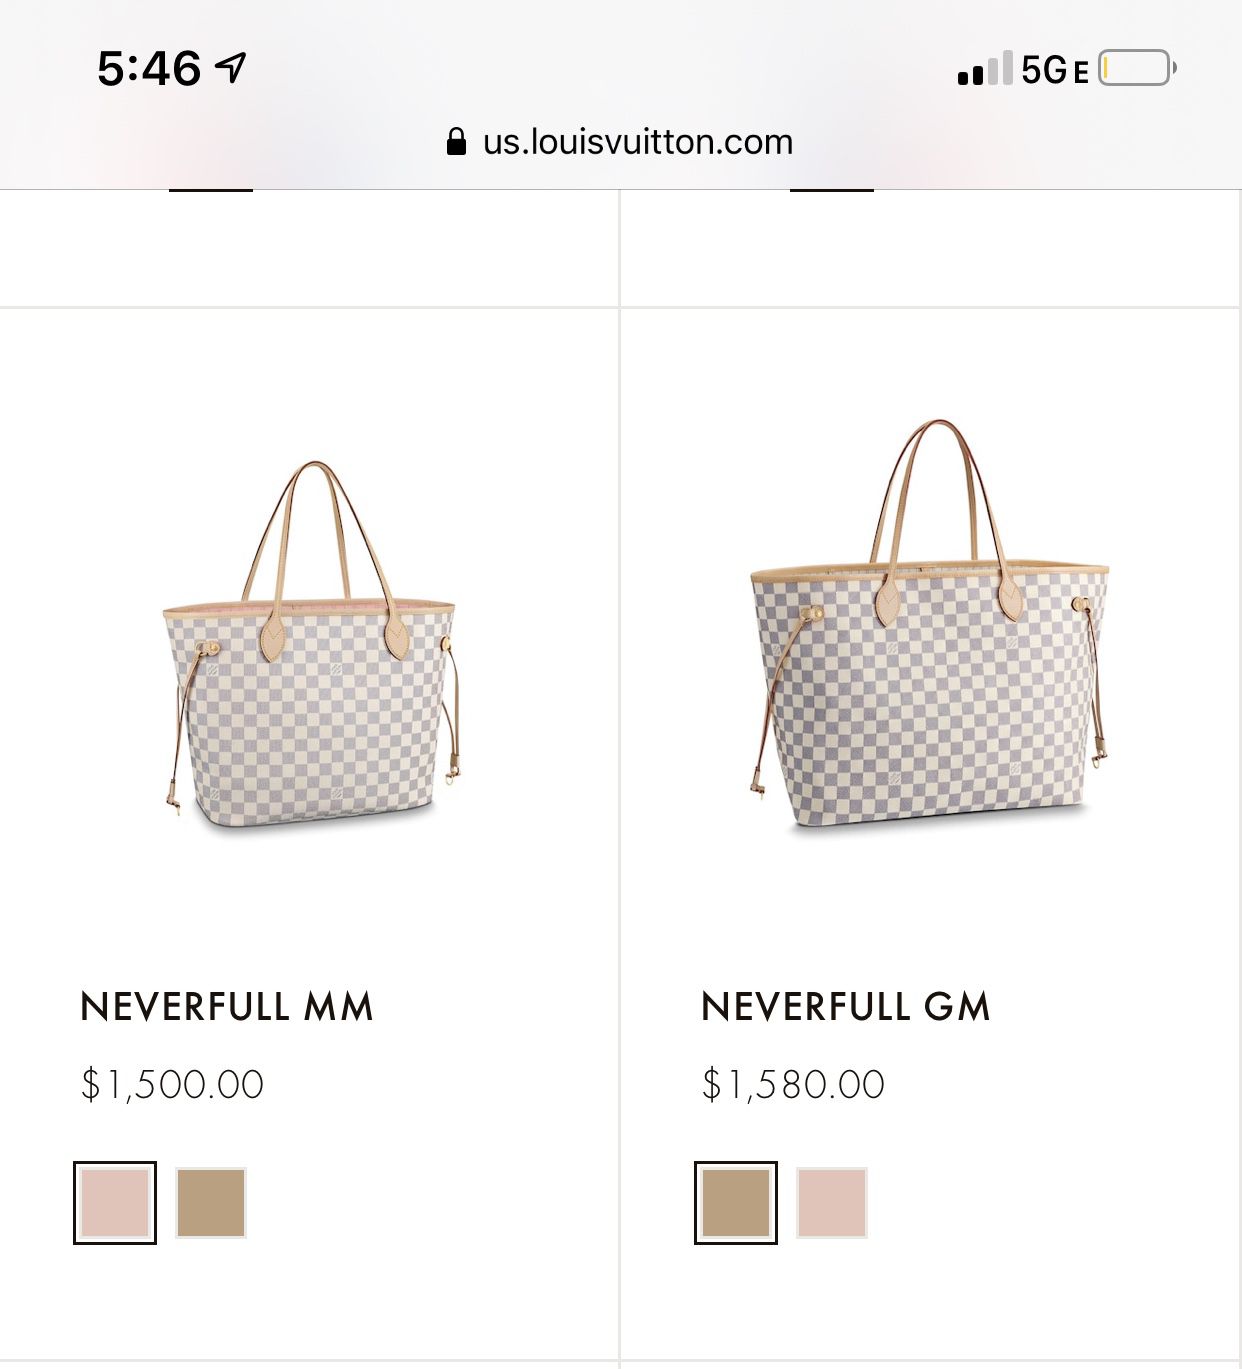 Neverful bag